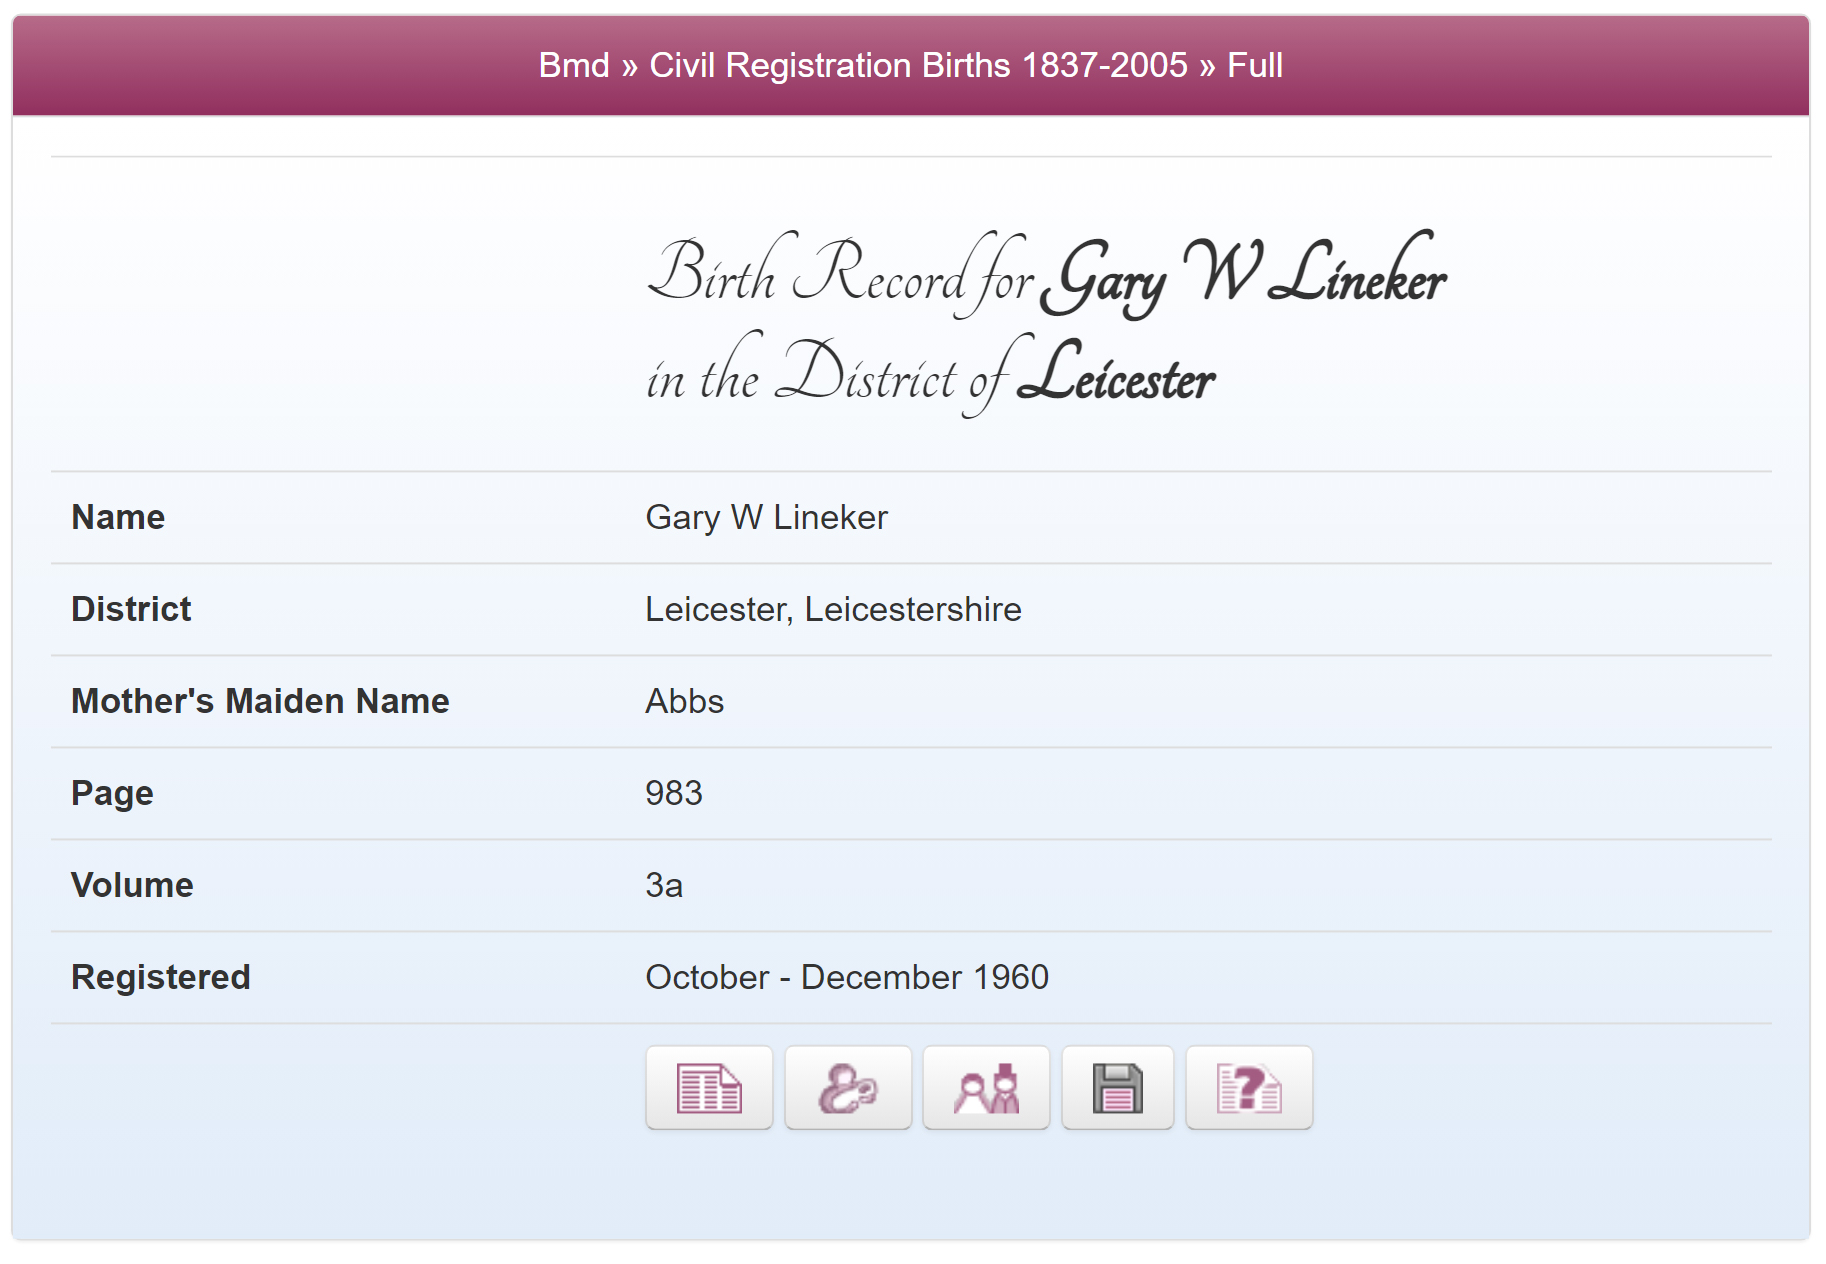 Gary Lineker's birth record